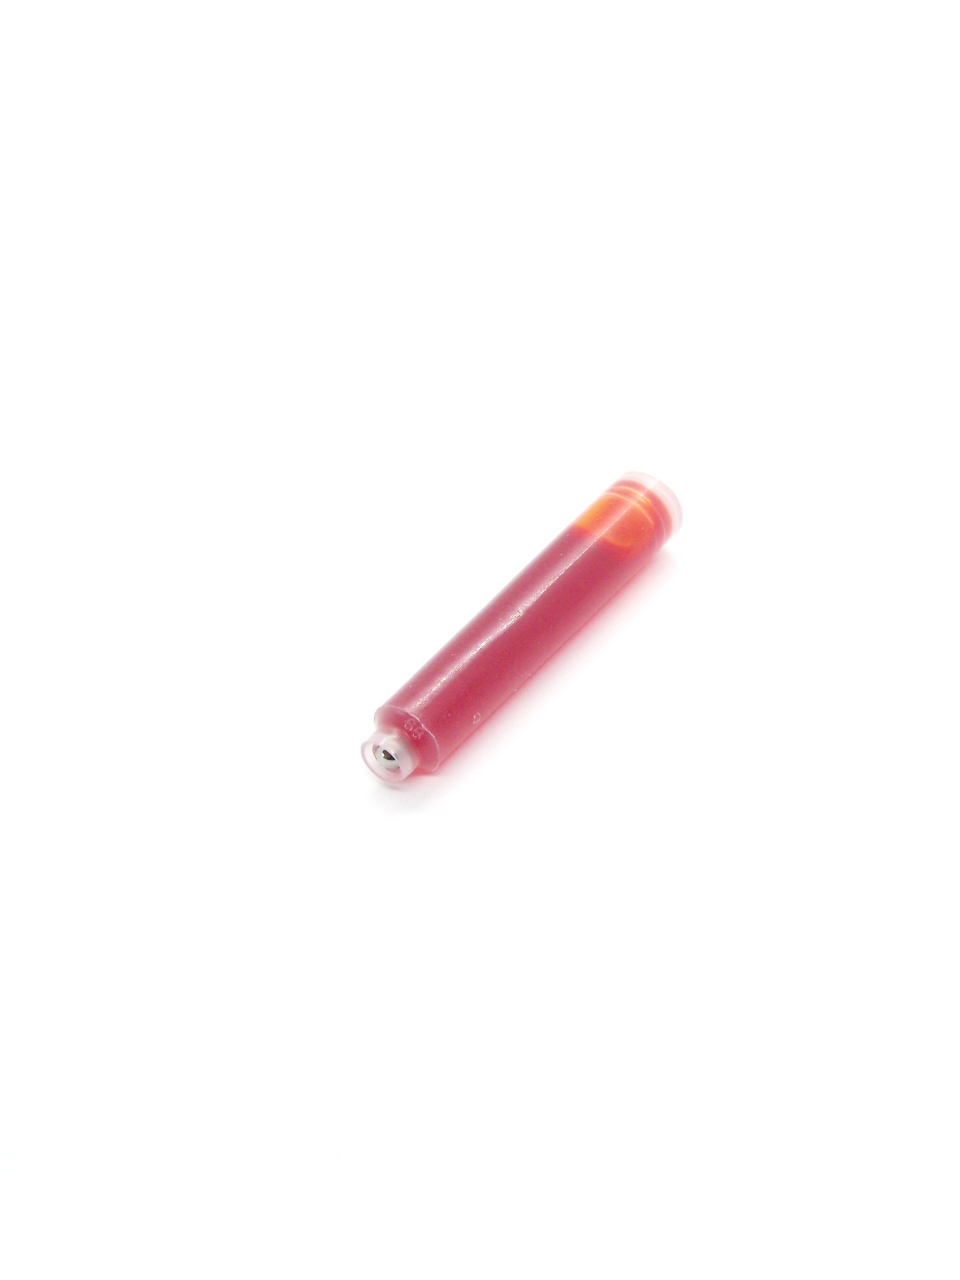 Cartridges For Tombow Fountain Pens (Orange)